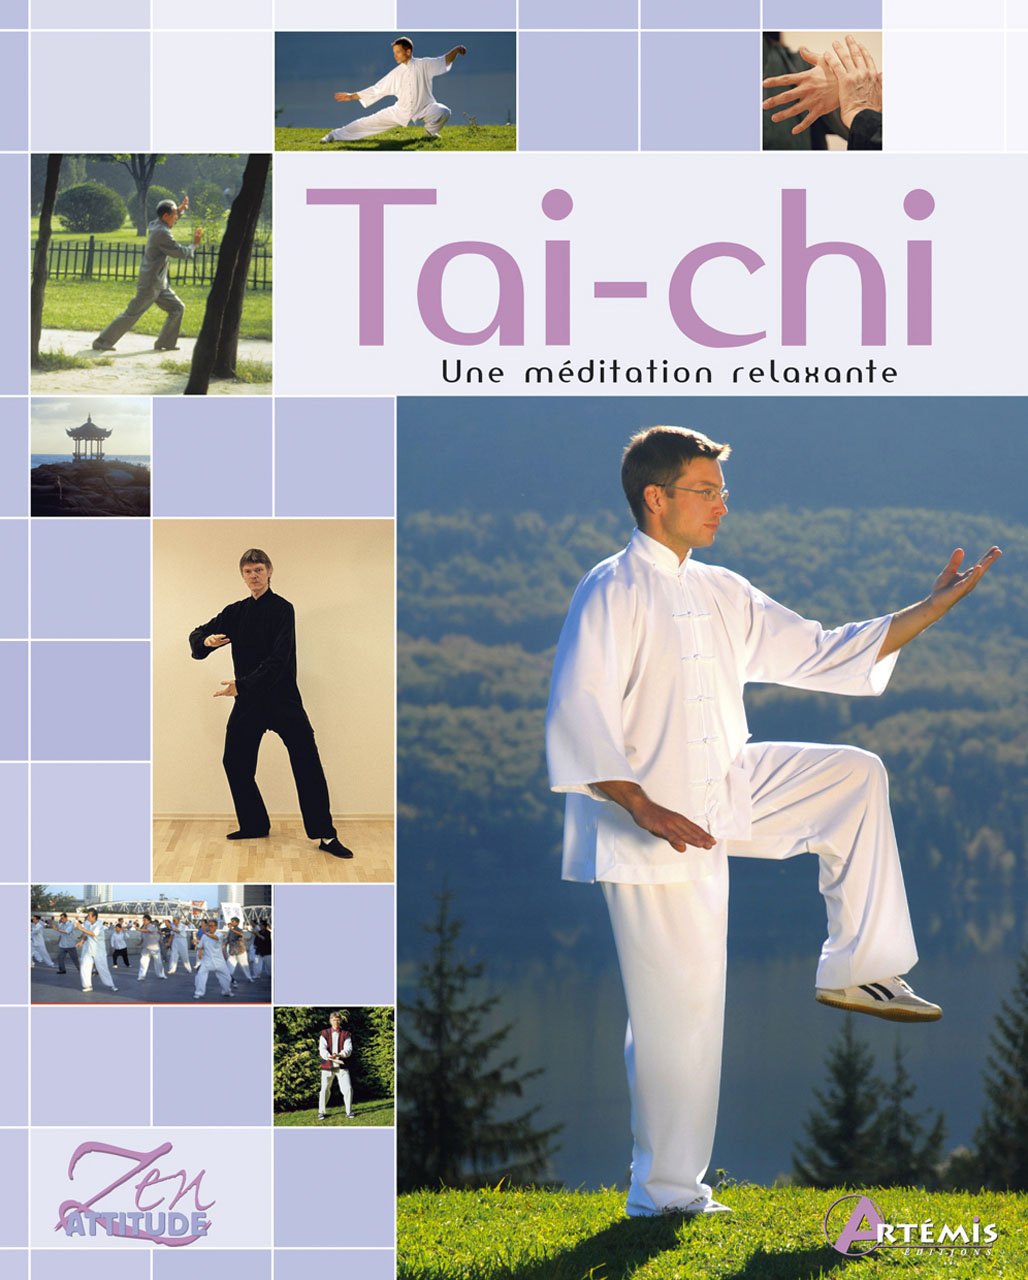 Tai-chi - Une méditation relaxante